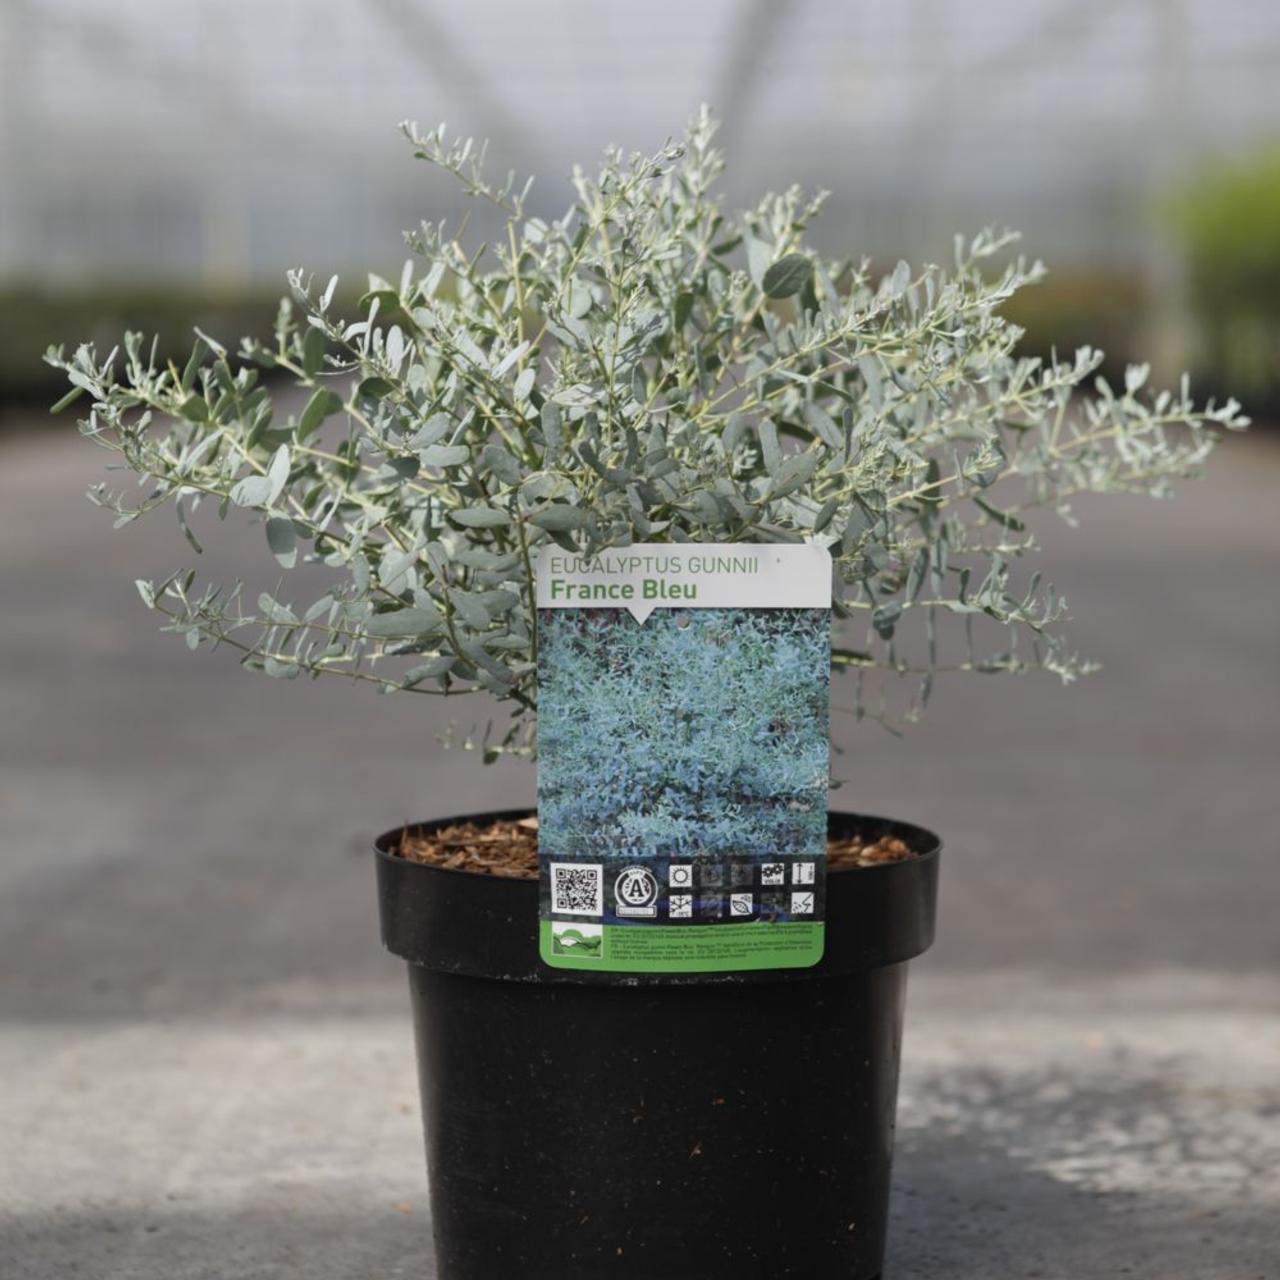 Eucalyptus gunnii 'France Bleu' plant